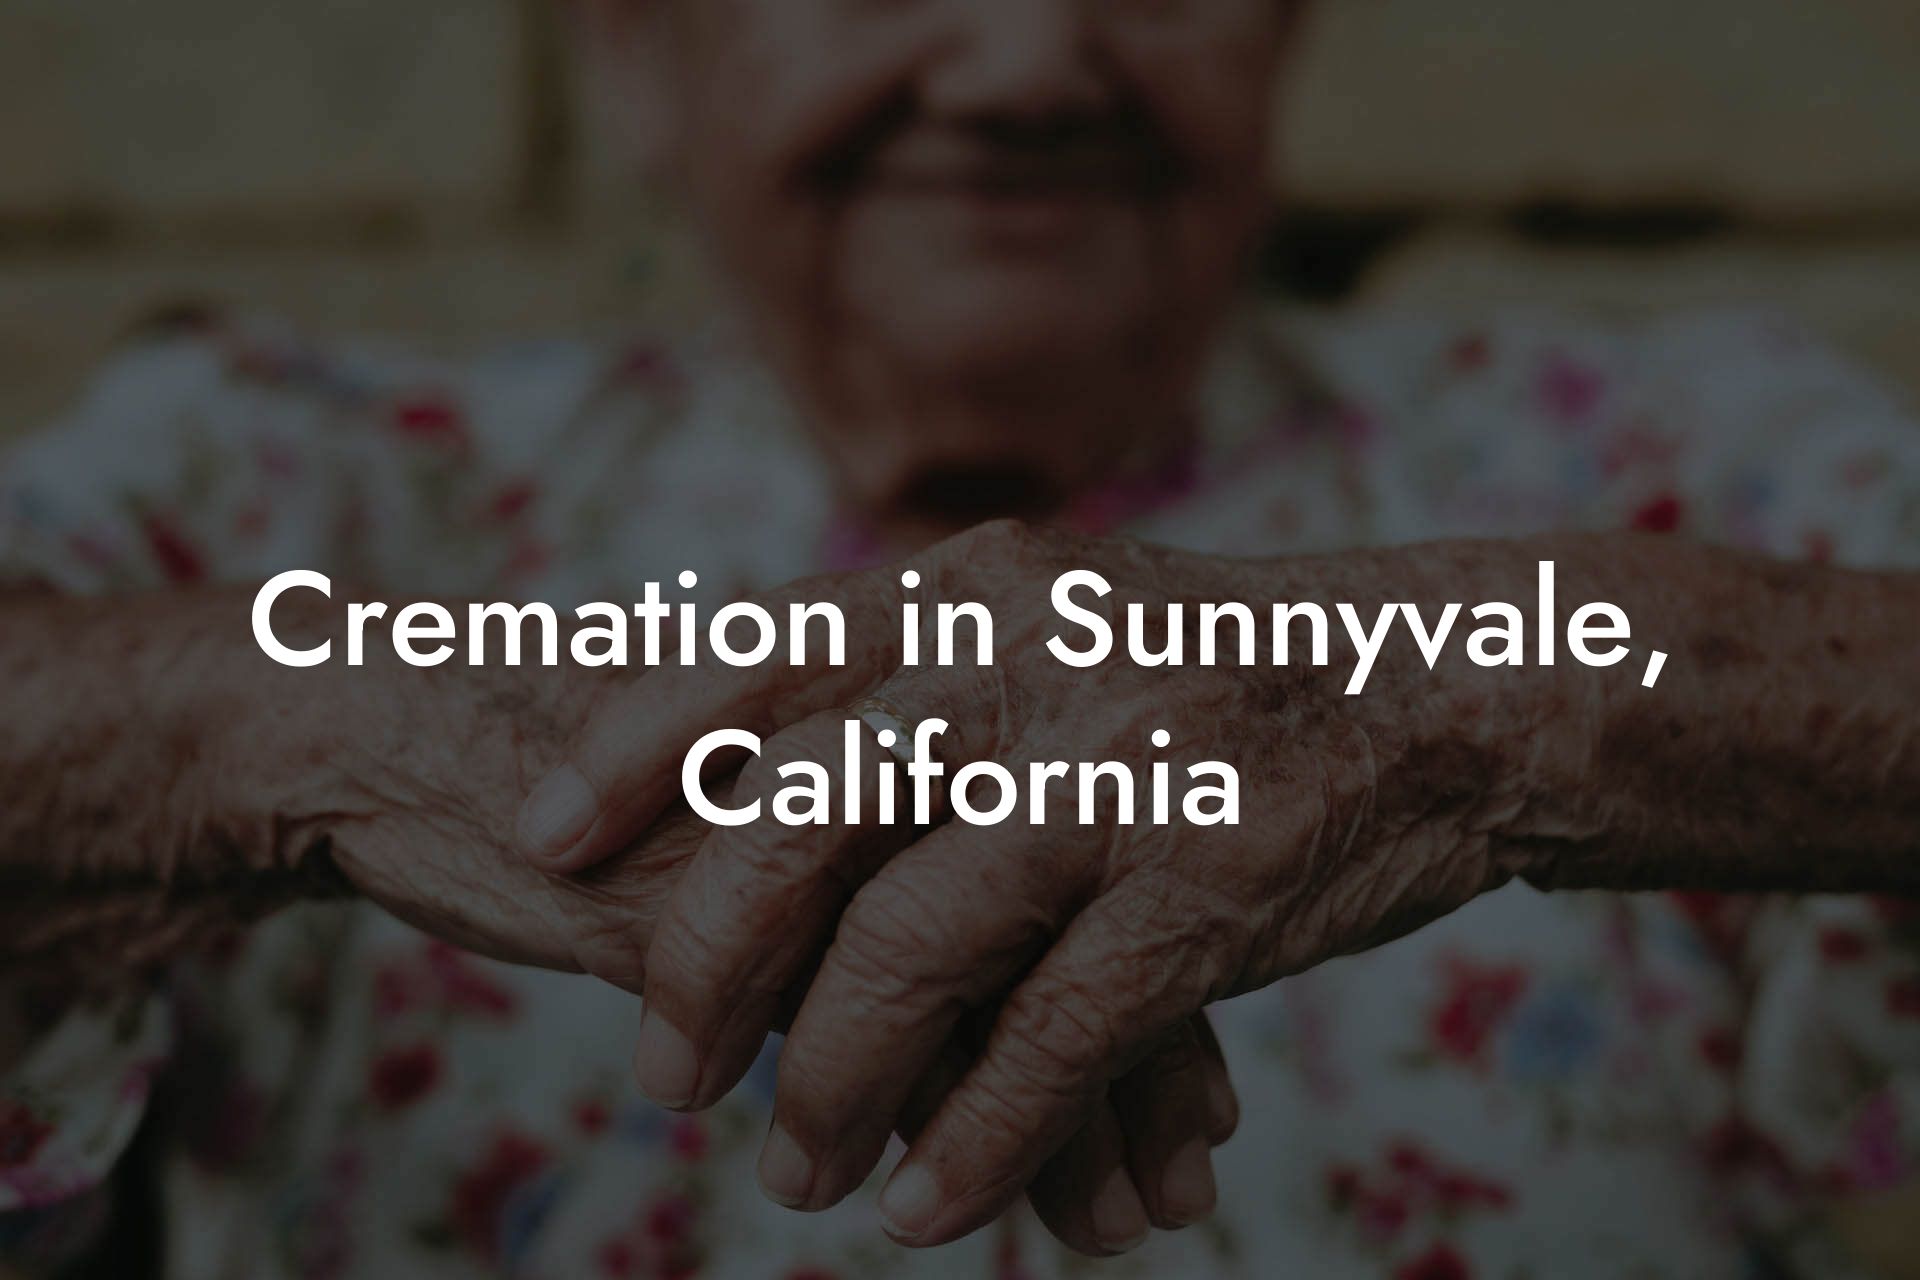 Cremation in Sunnyvale, California